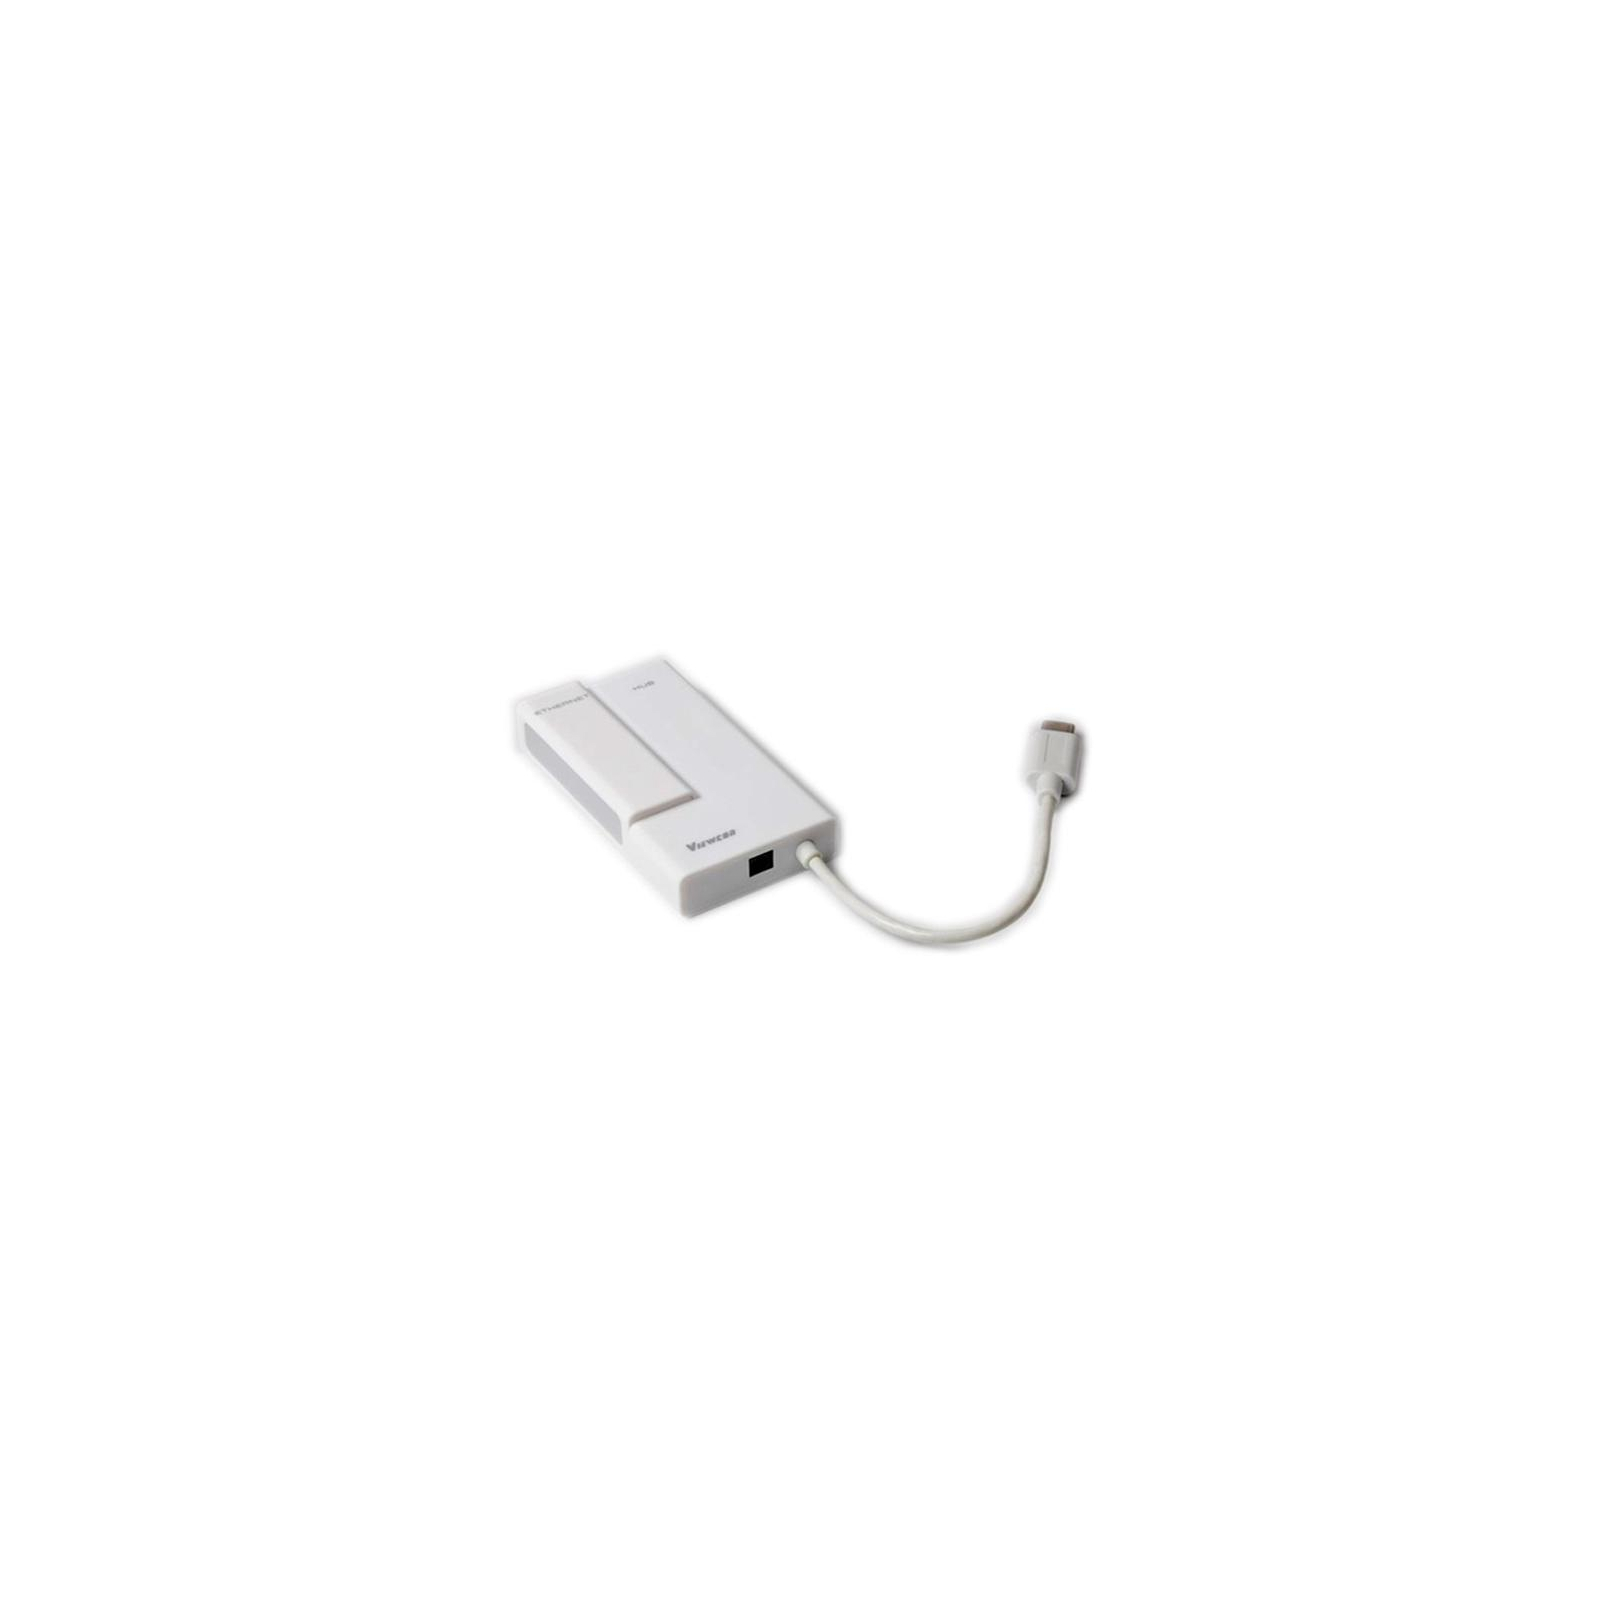 Переходник Type-C to Ethernet&USB Viewcon (VC 450 W (White)) изображение 3